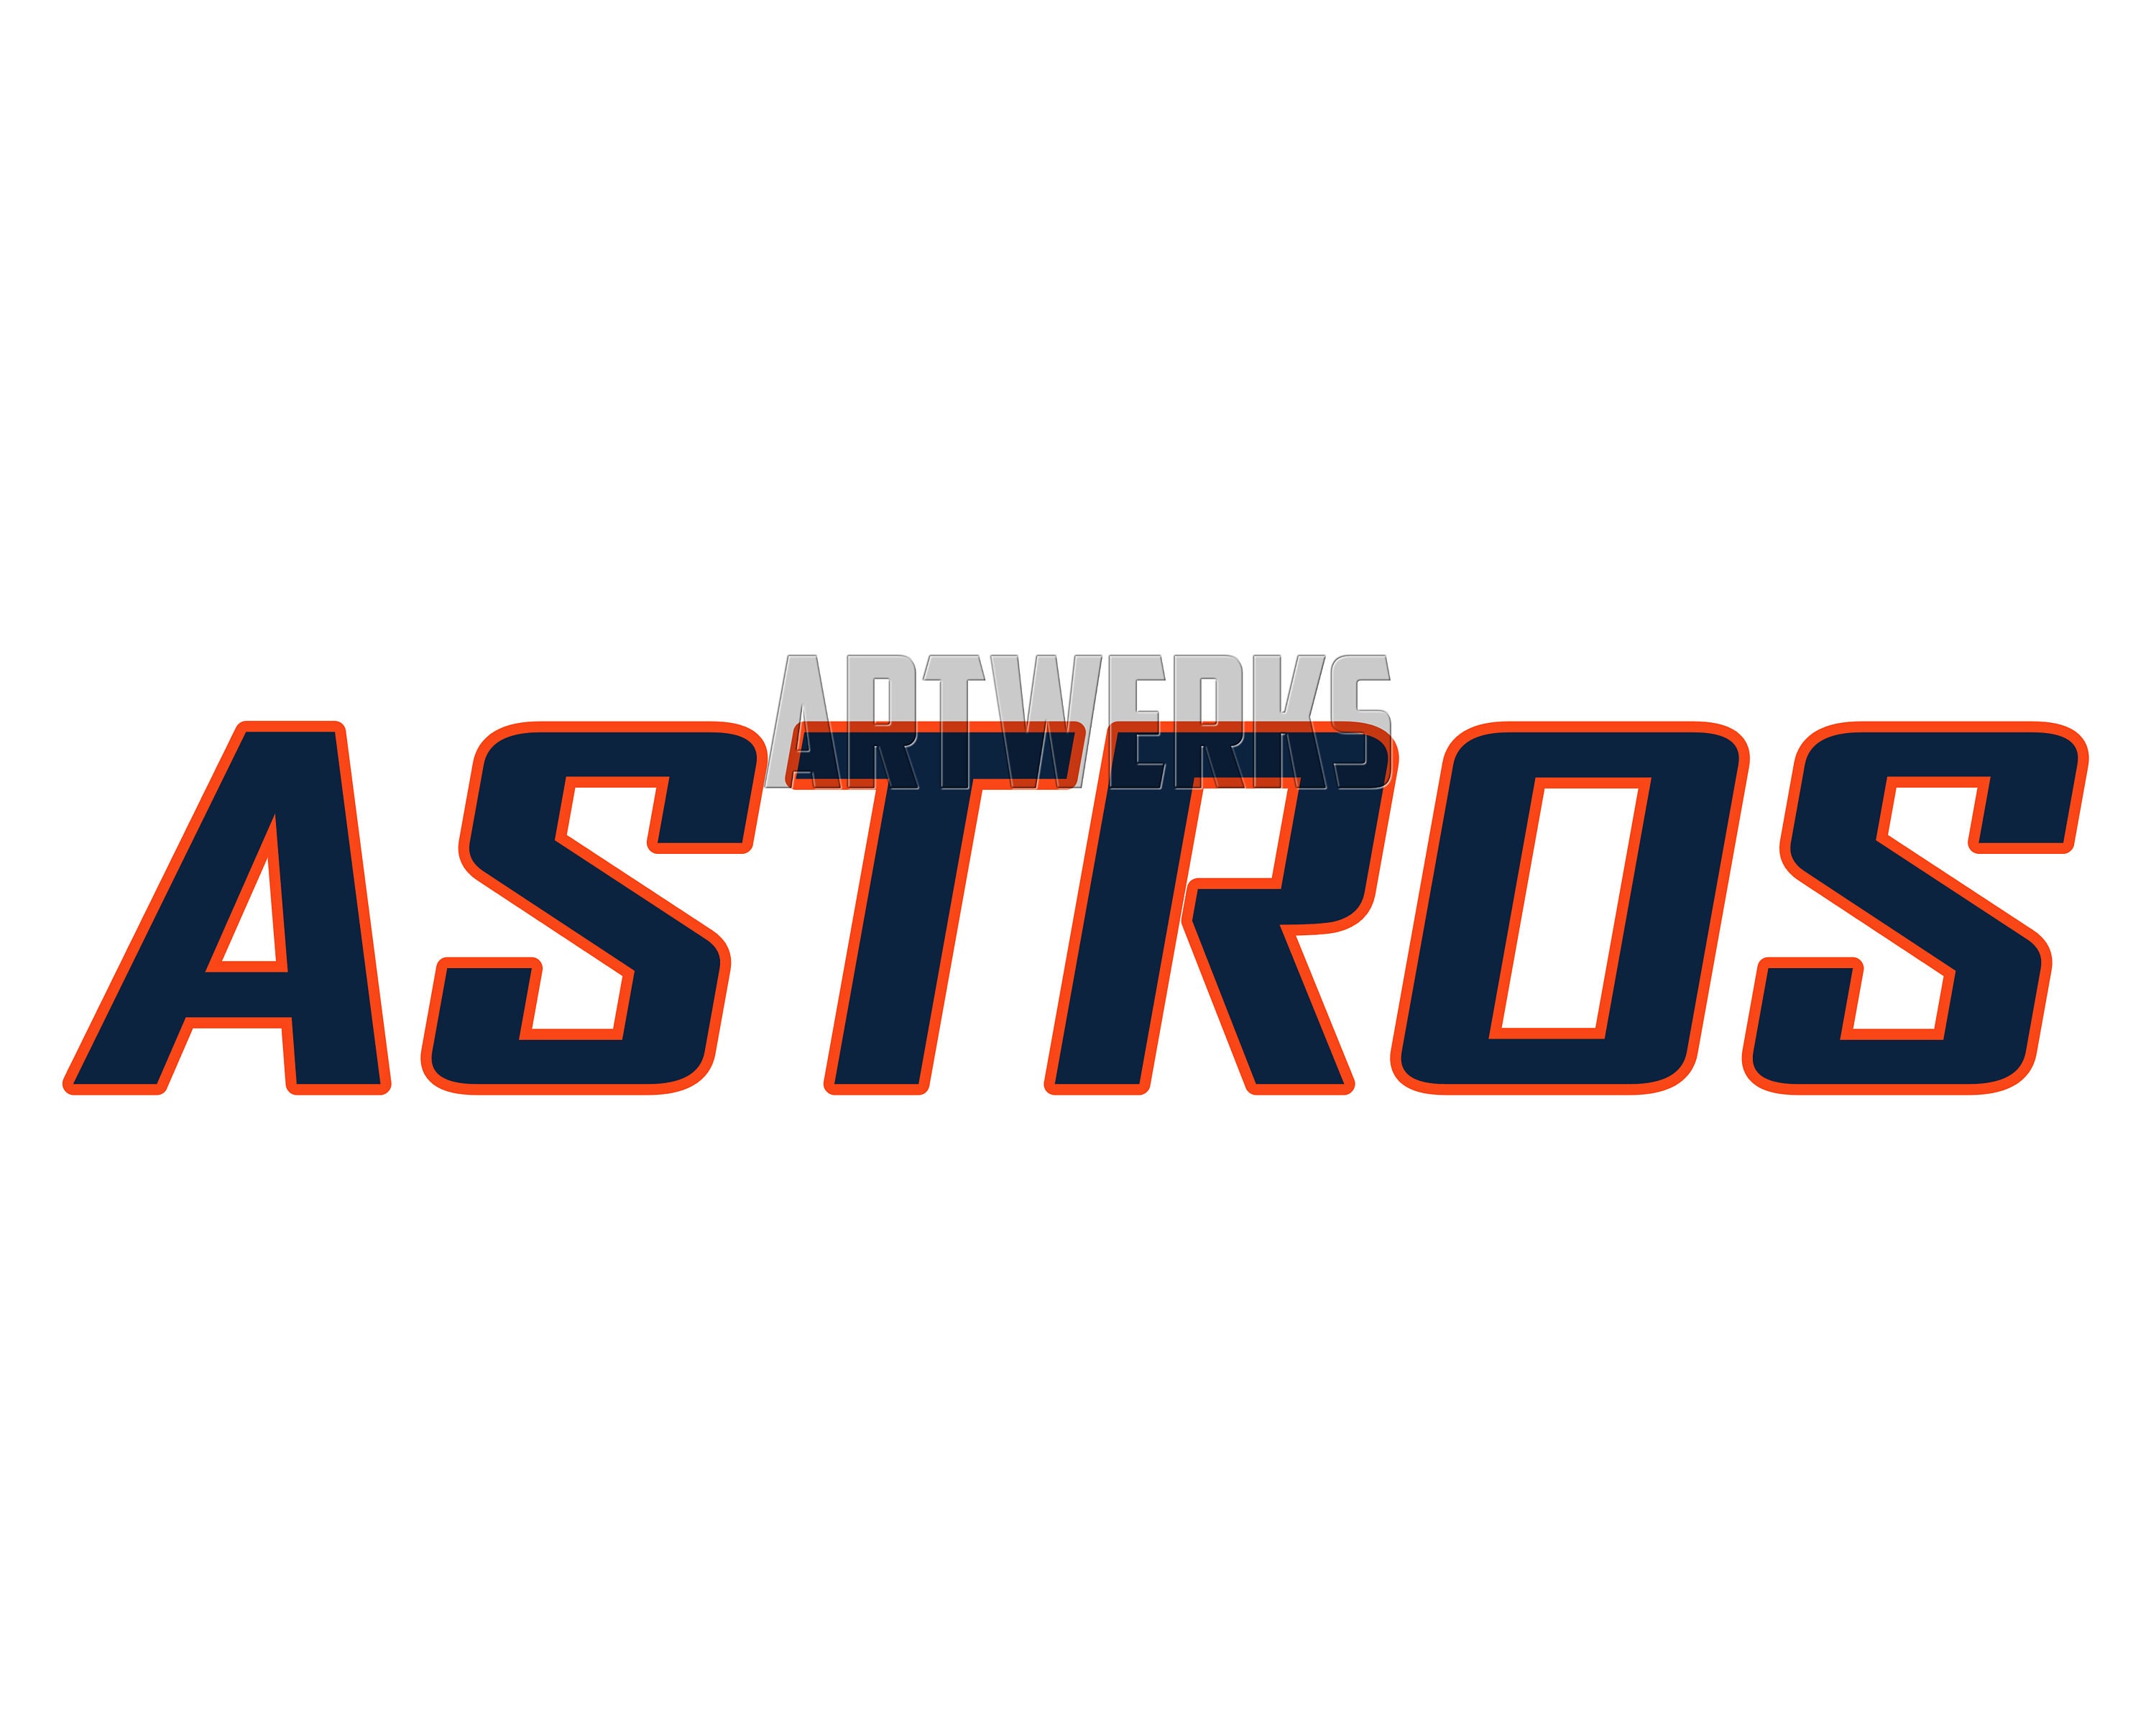 Houston Astros SVG: Show Your Team Spirit - SVGbees